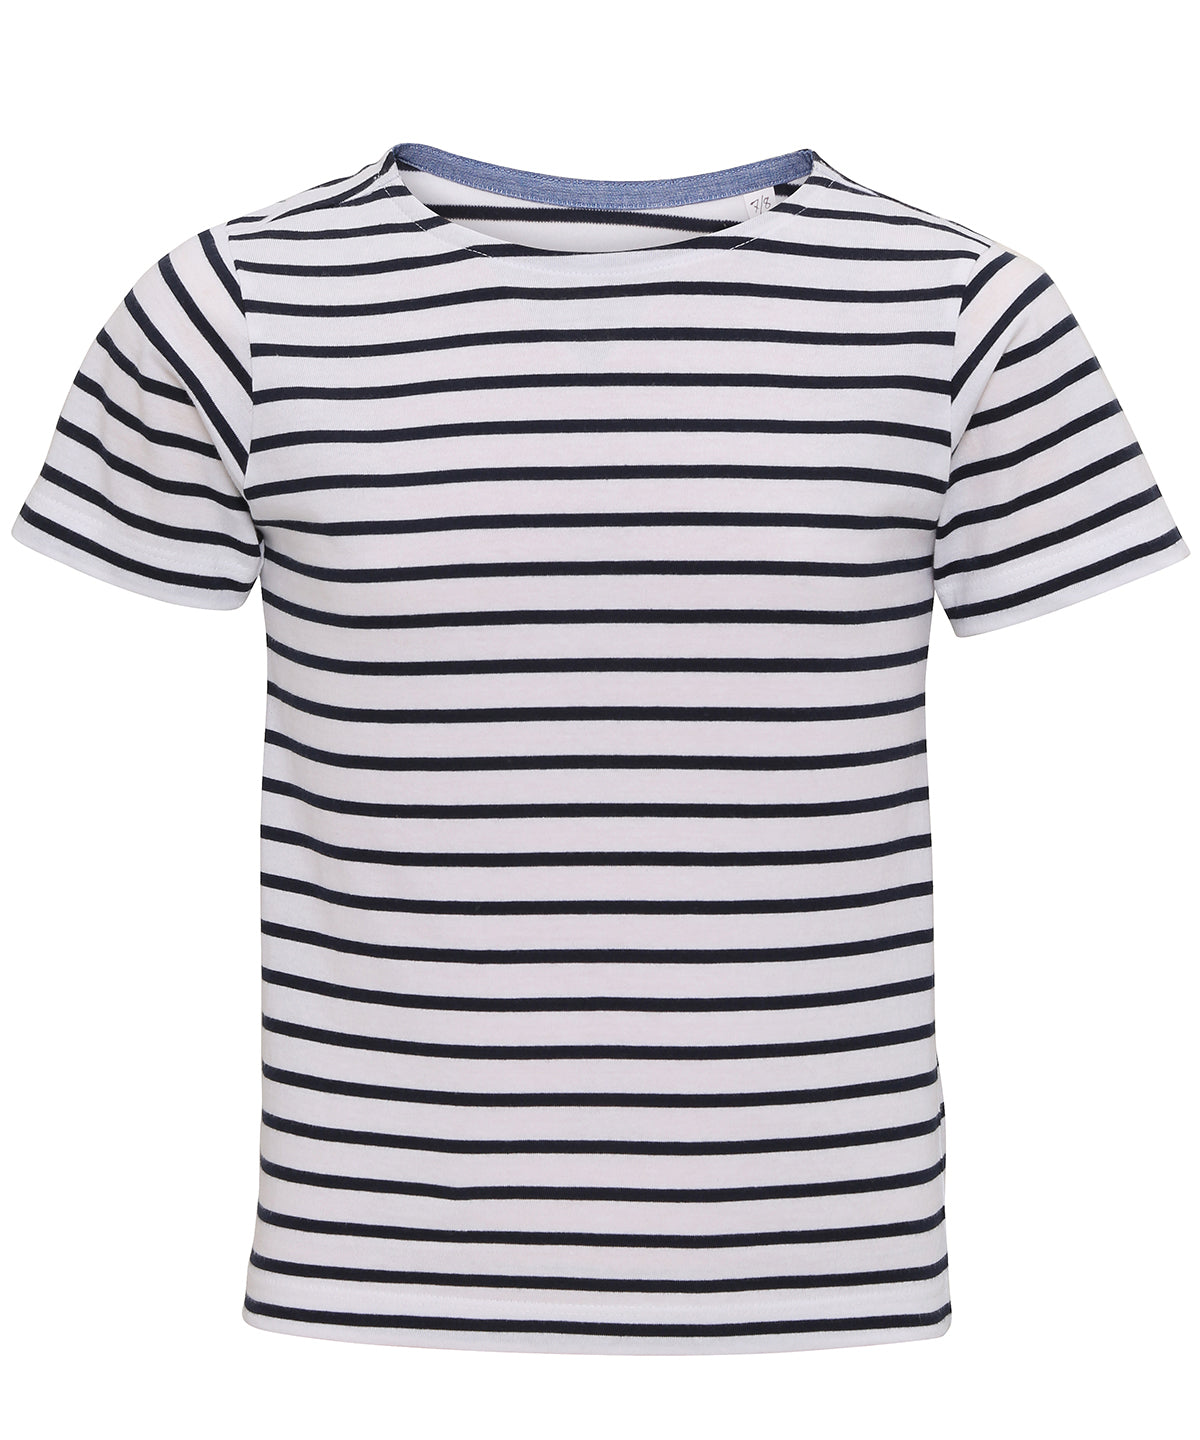 Personalised T-Shirts - Stripes Asquith & Fox Kids Marinière coastal short sleeve tee